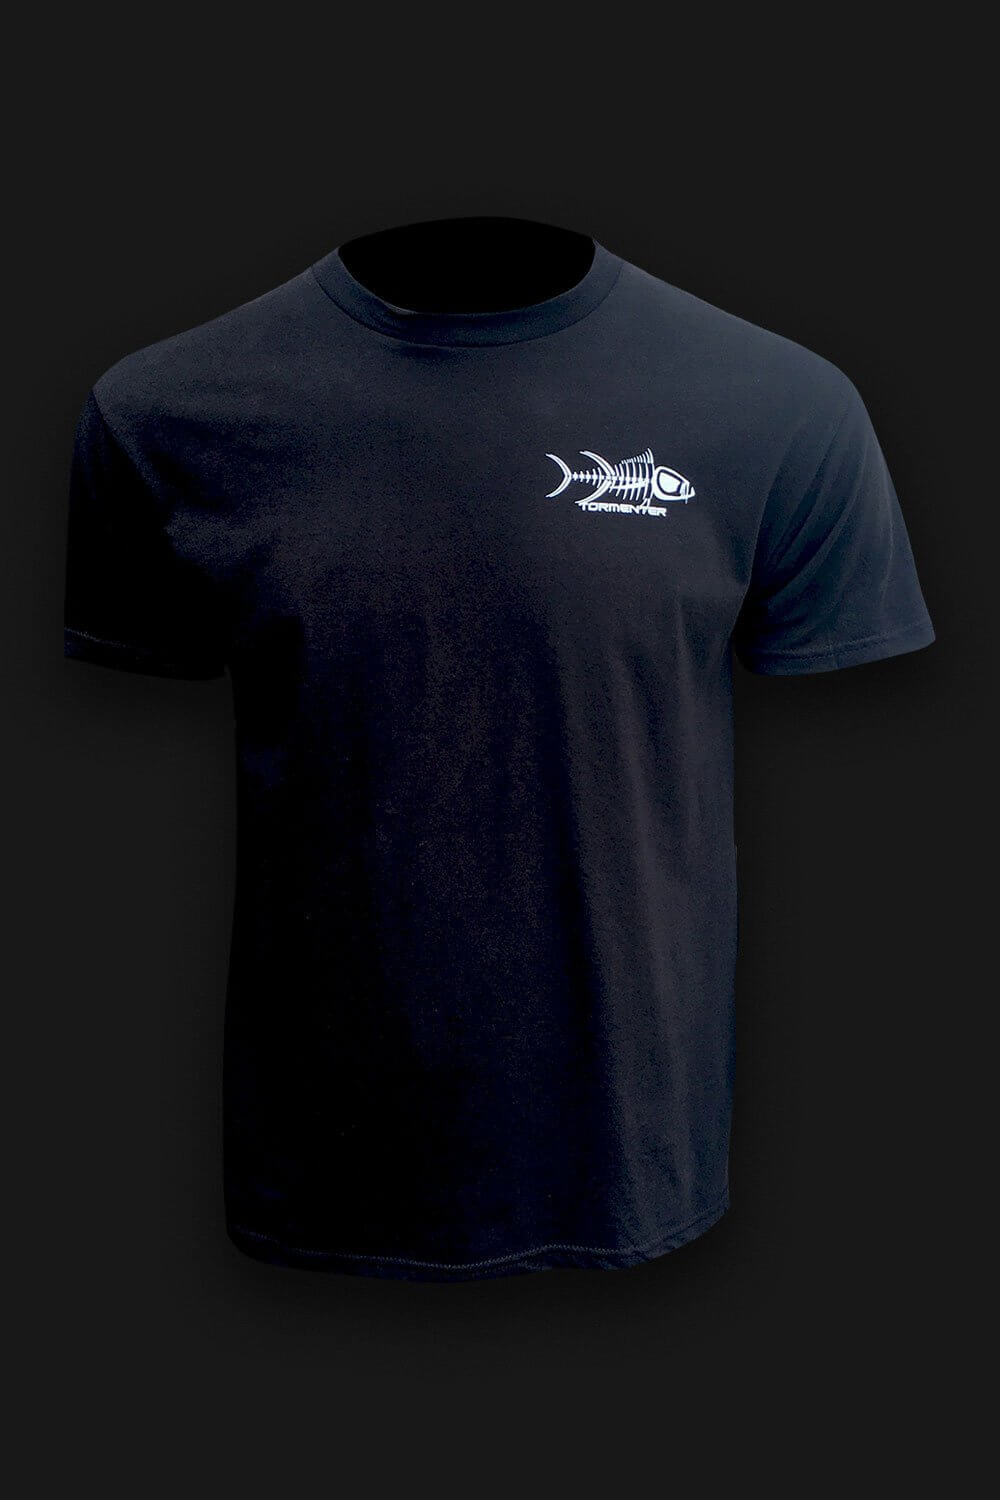 Patriot Black Men's Fishing T-Shirt - Tormenter Ocean Fishing Gear Apparel Boating SPF Surfing Watersports